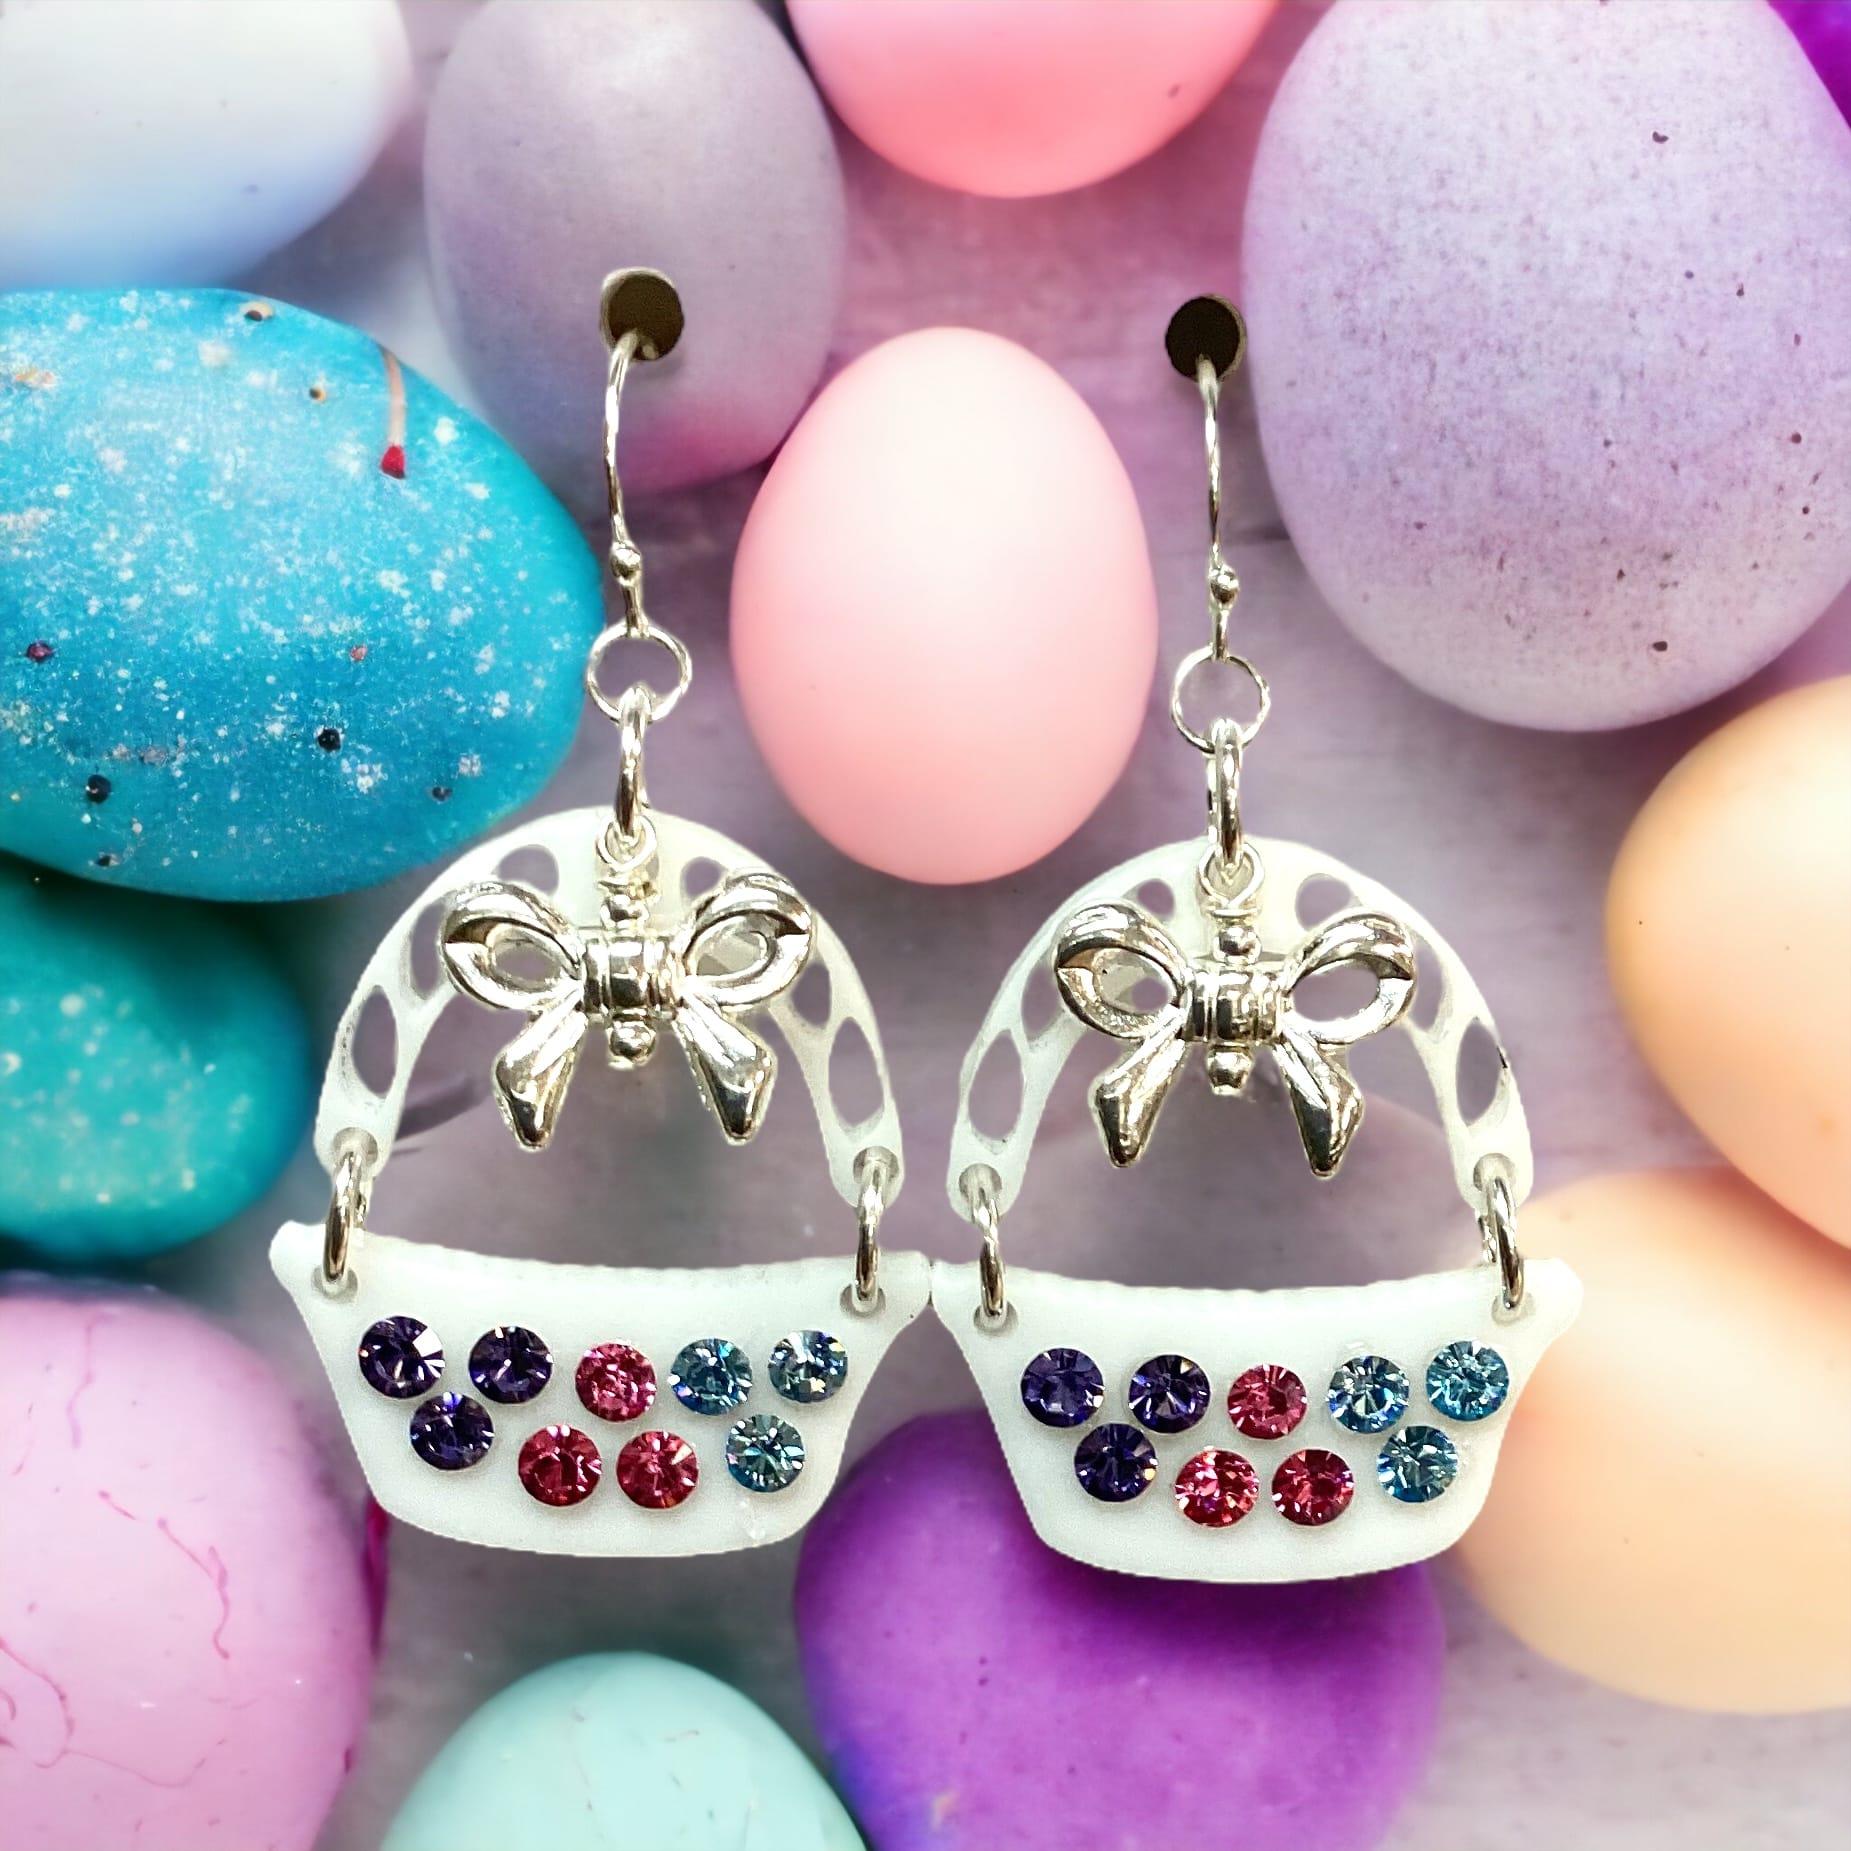 DIY Earring Kit - Easter Basket Earrings